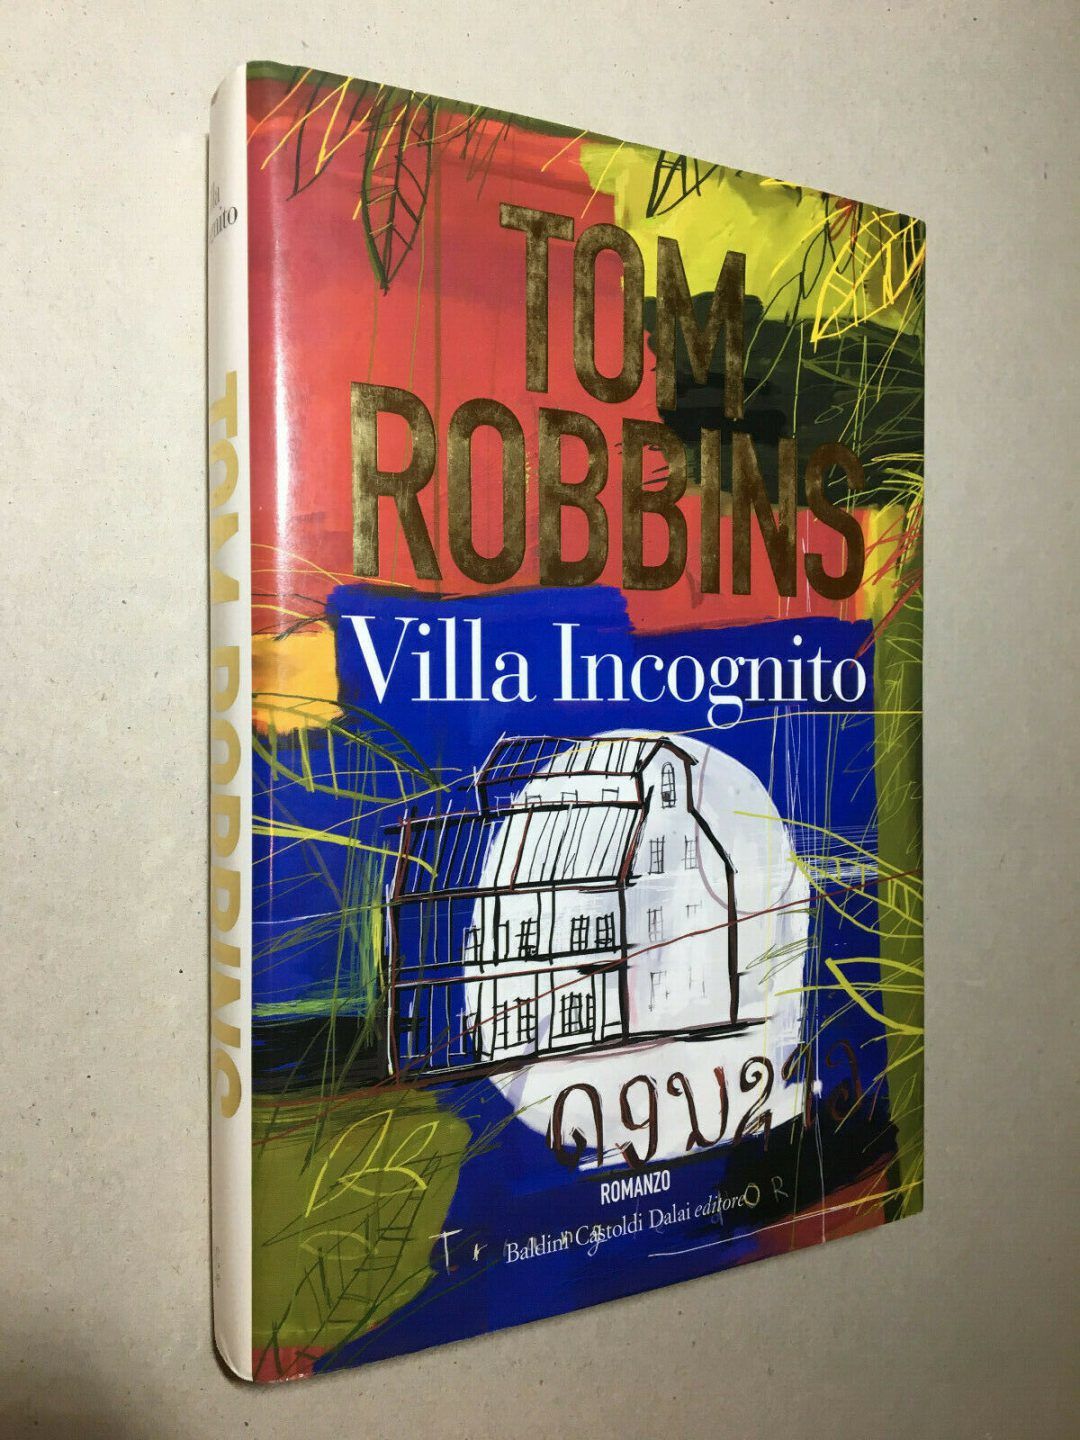 Villa Incognito by Tom Robbins